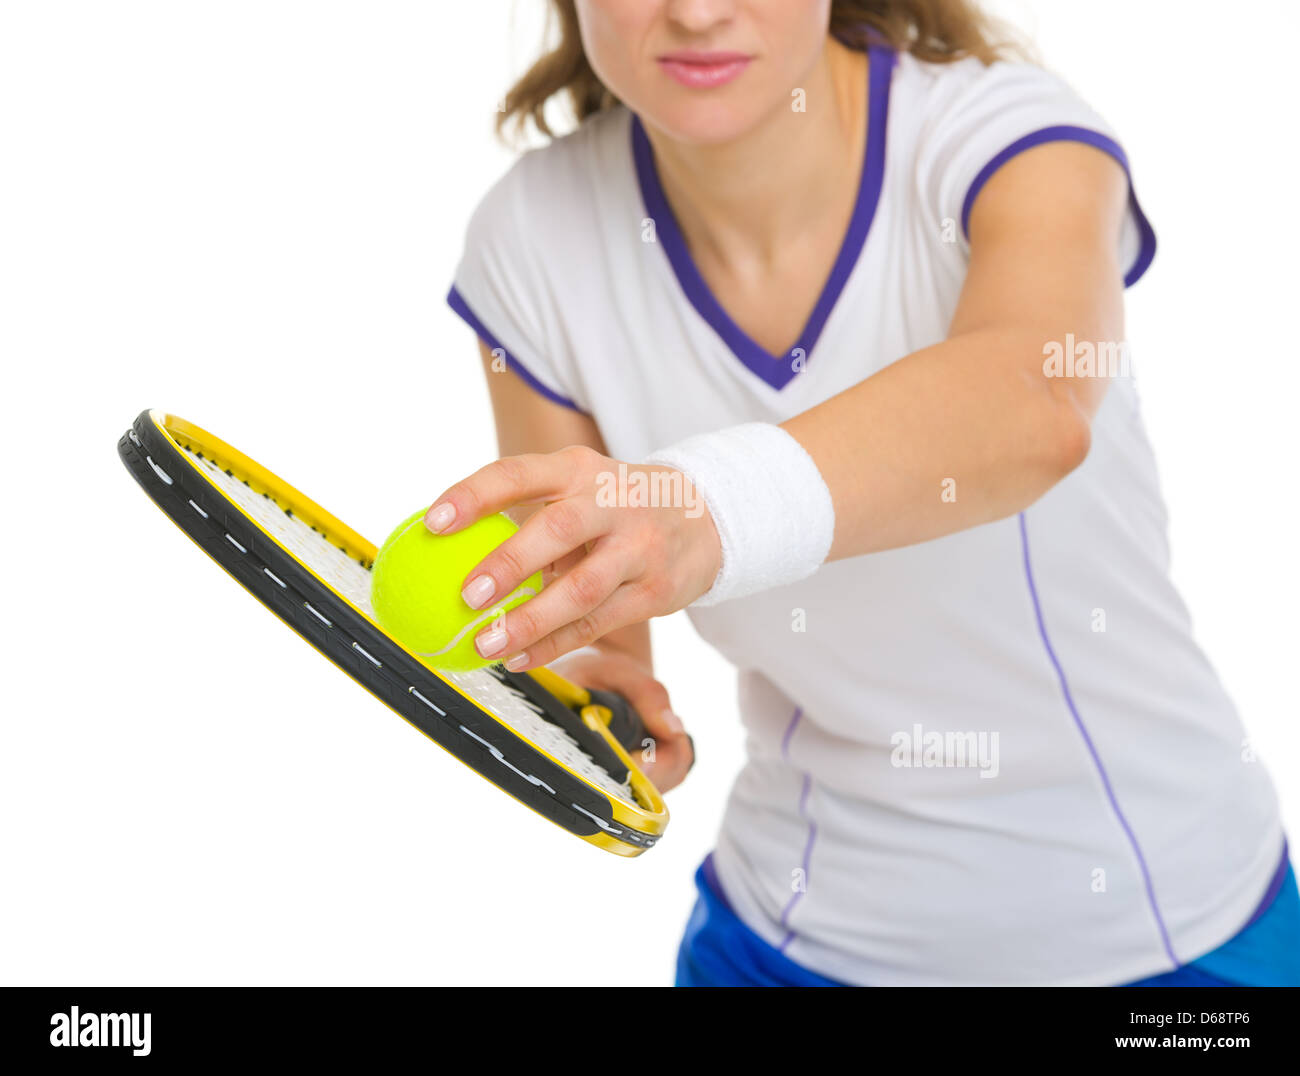 Closeup on female tennis player serving ball Stock Photo